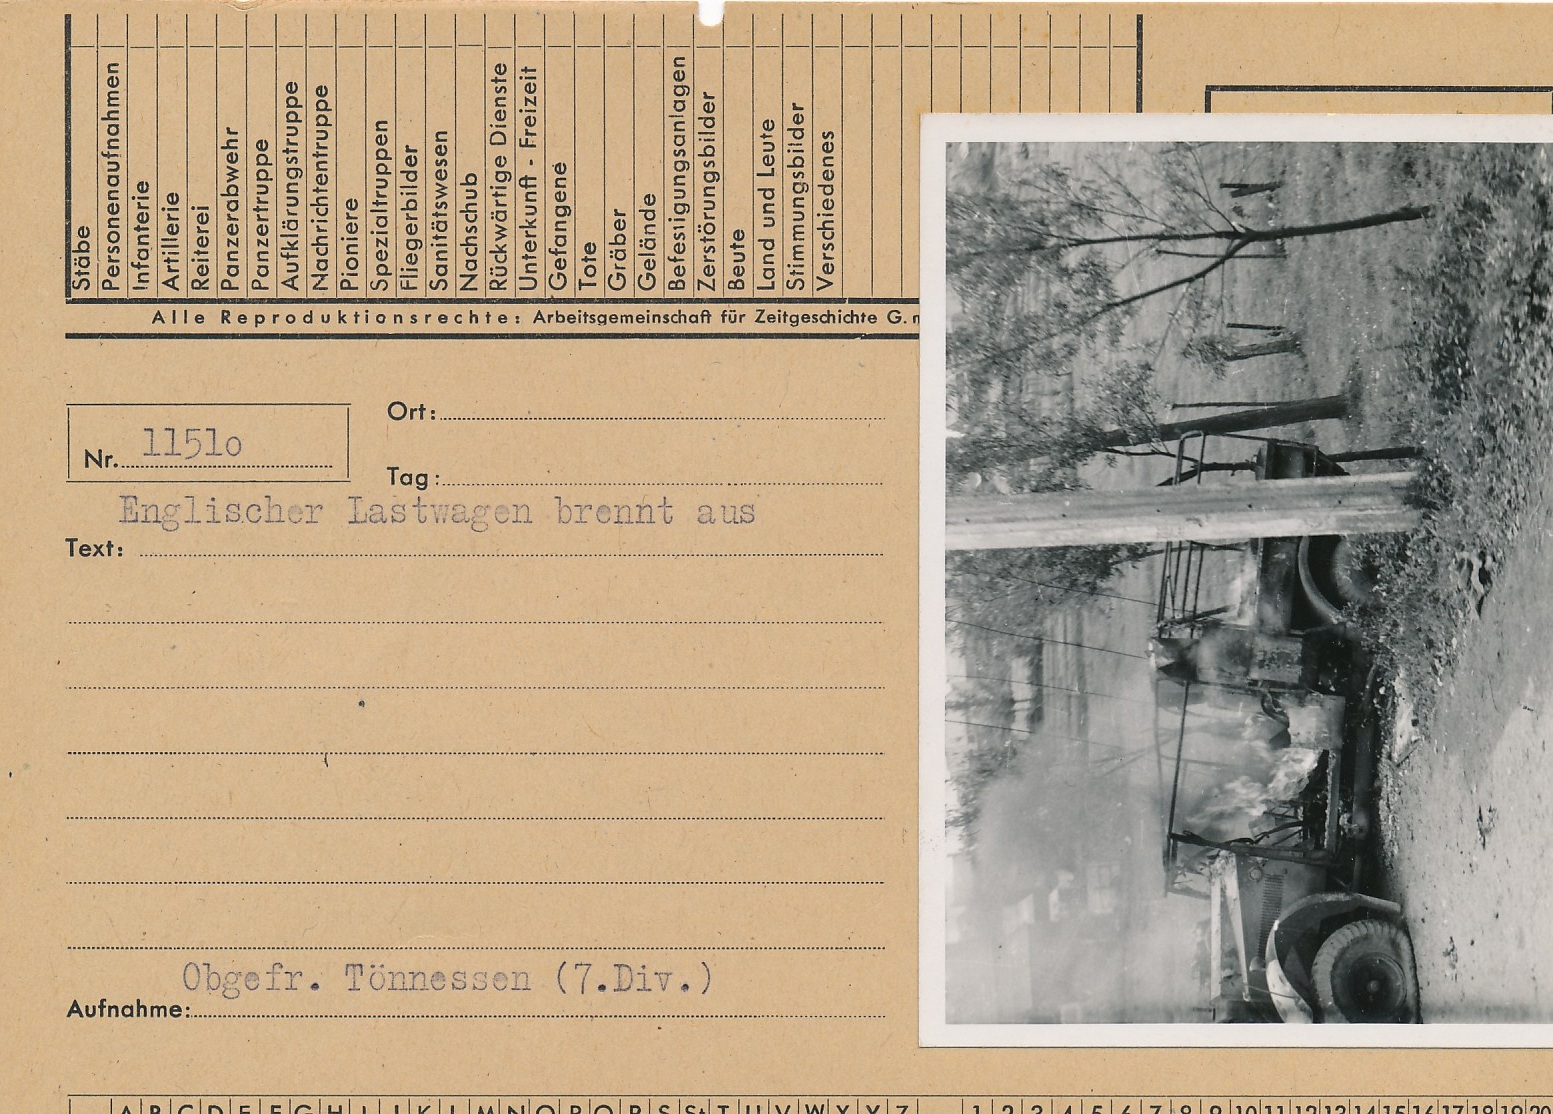 Westfront 1940, Photo with Descripton sheet